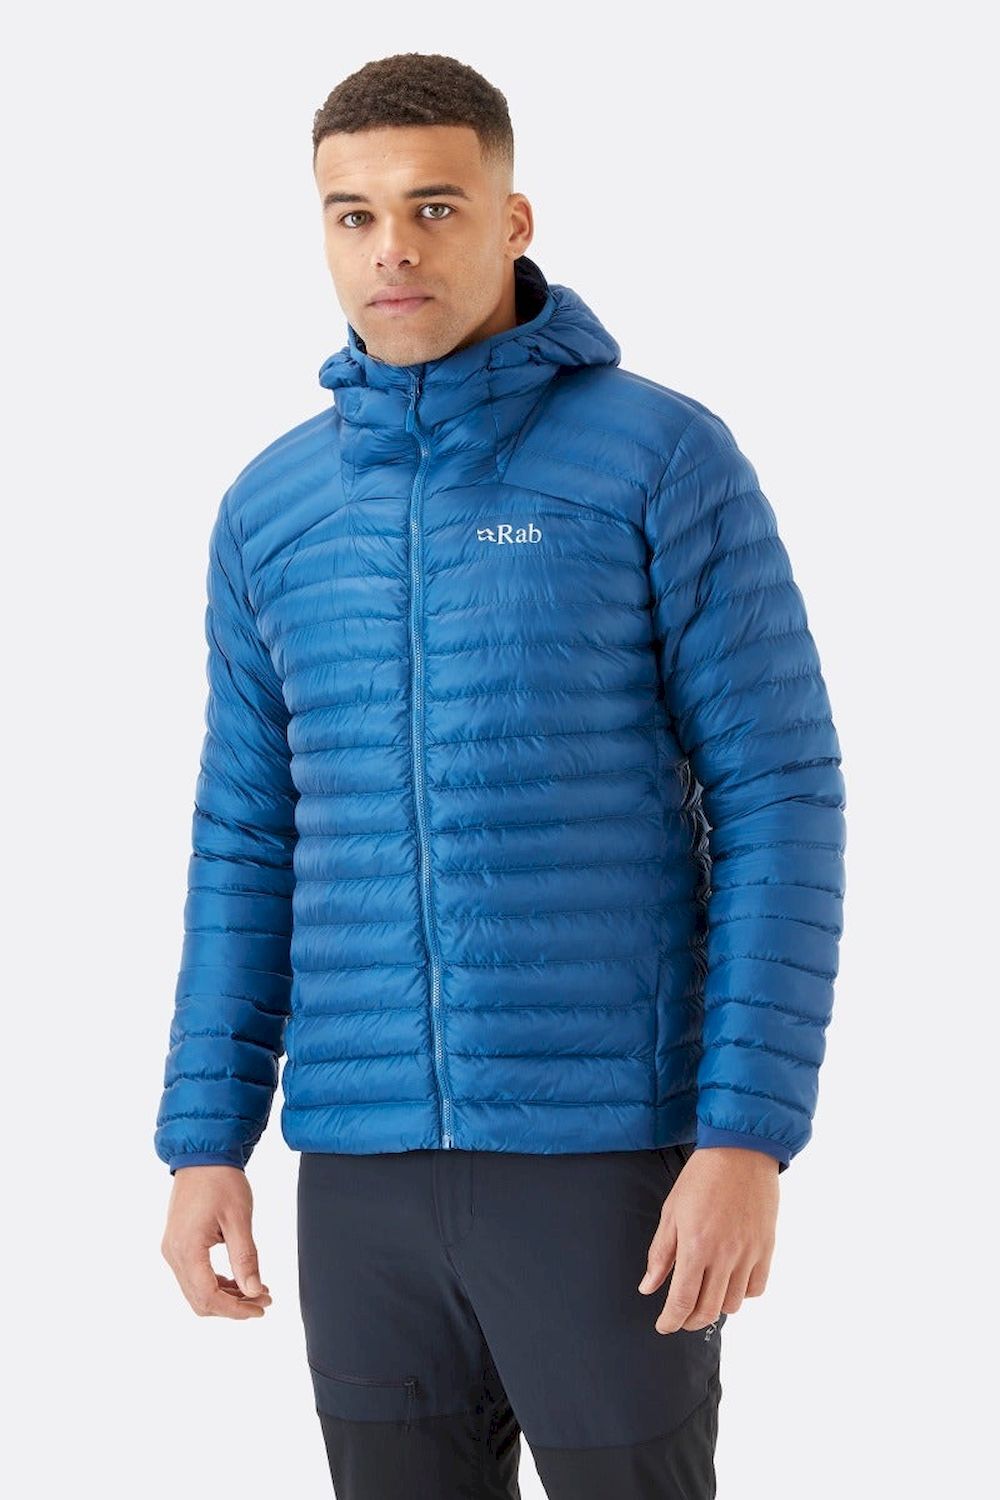 Rab Cirrus Alpine Jacket - Kunstfaserjacke - Herren